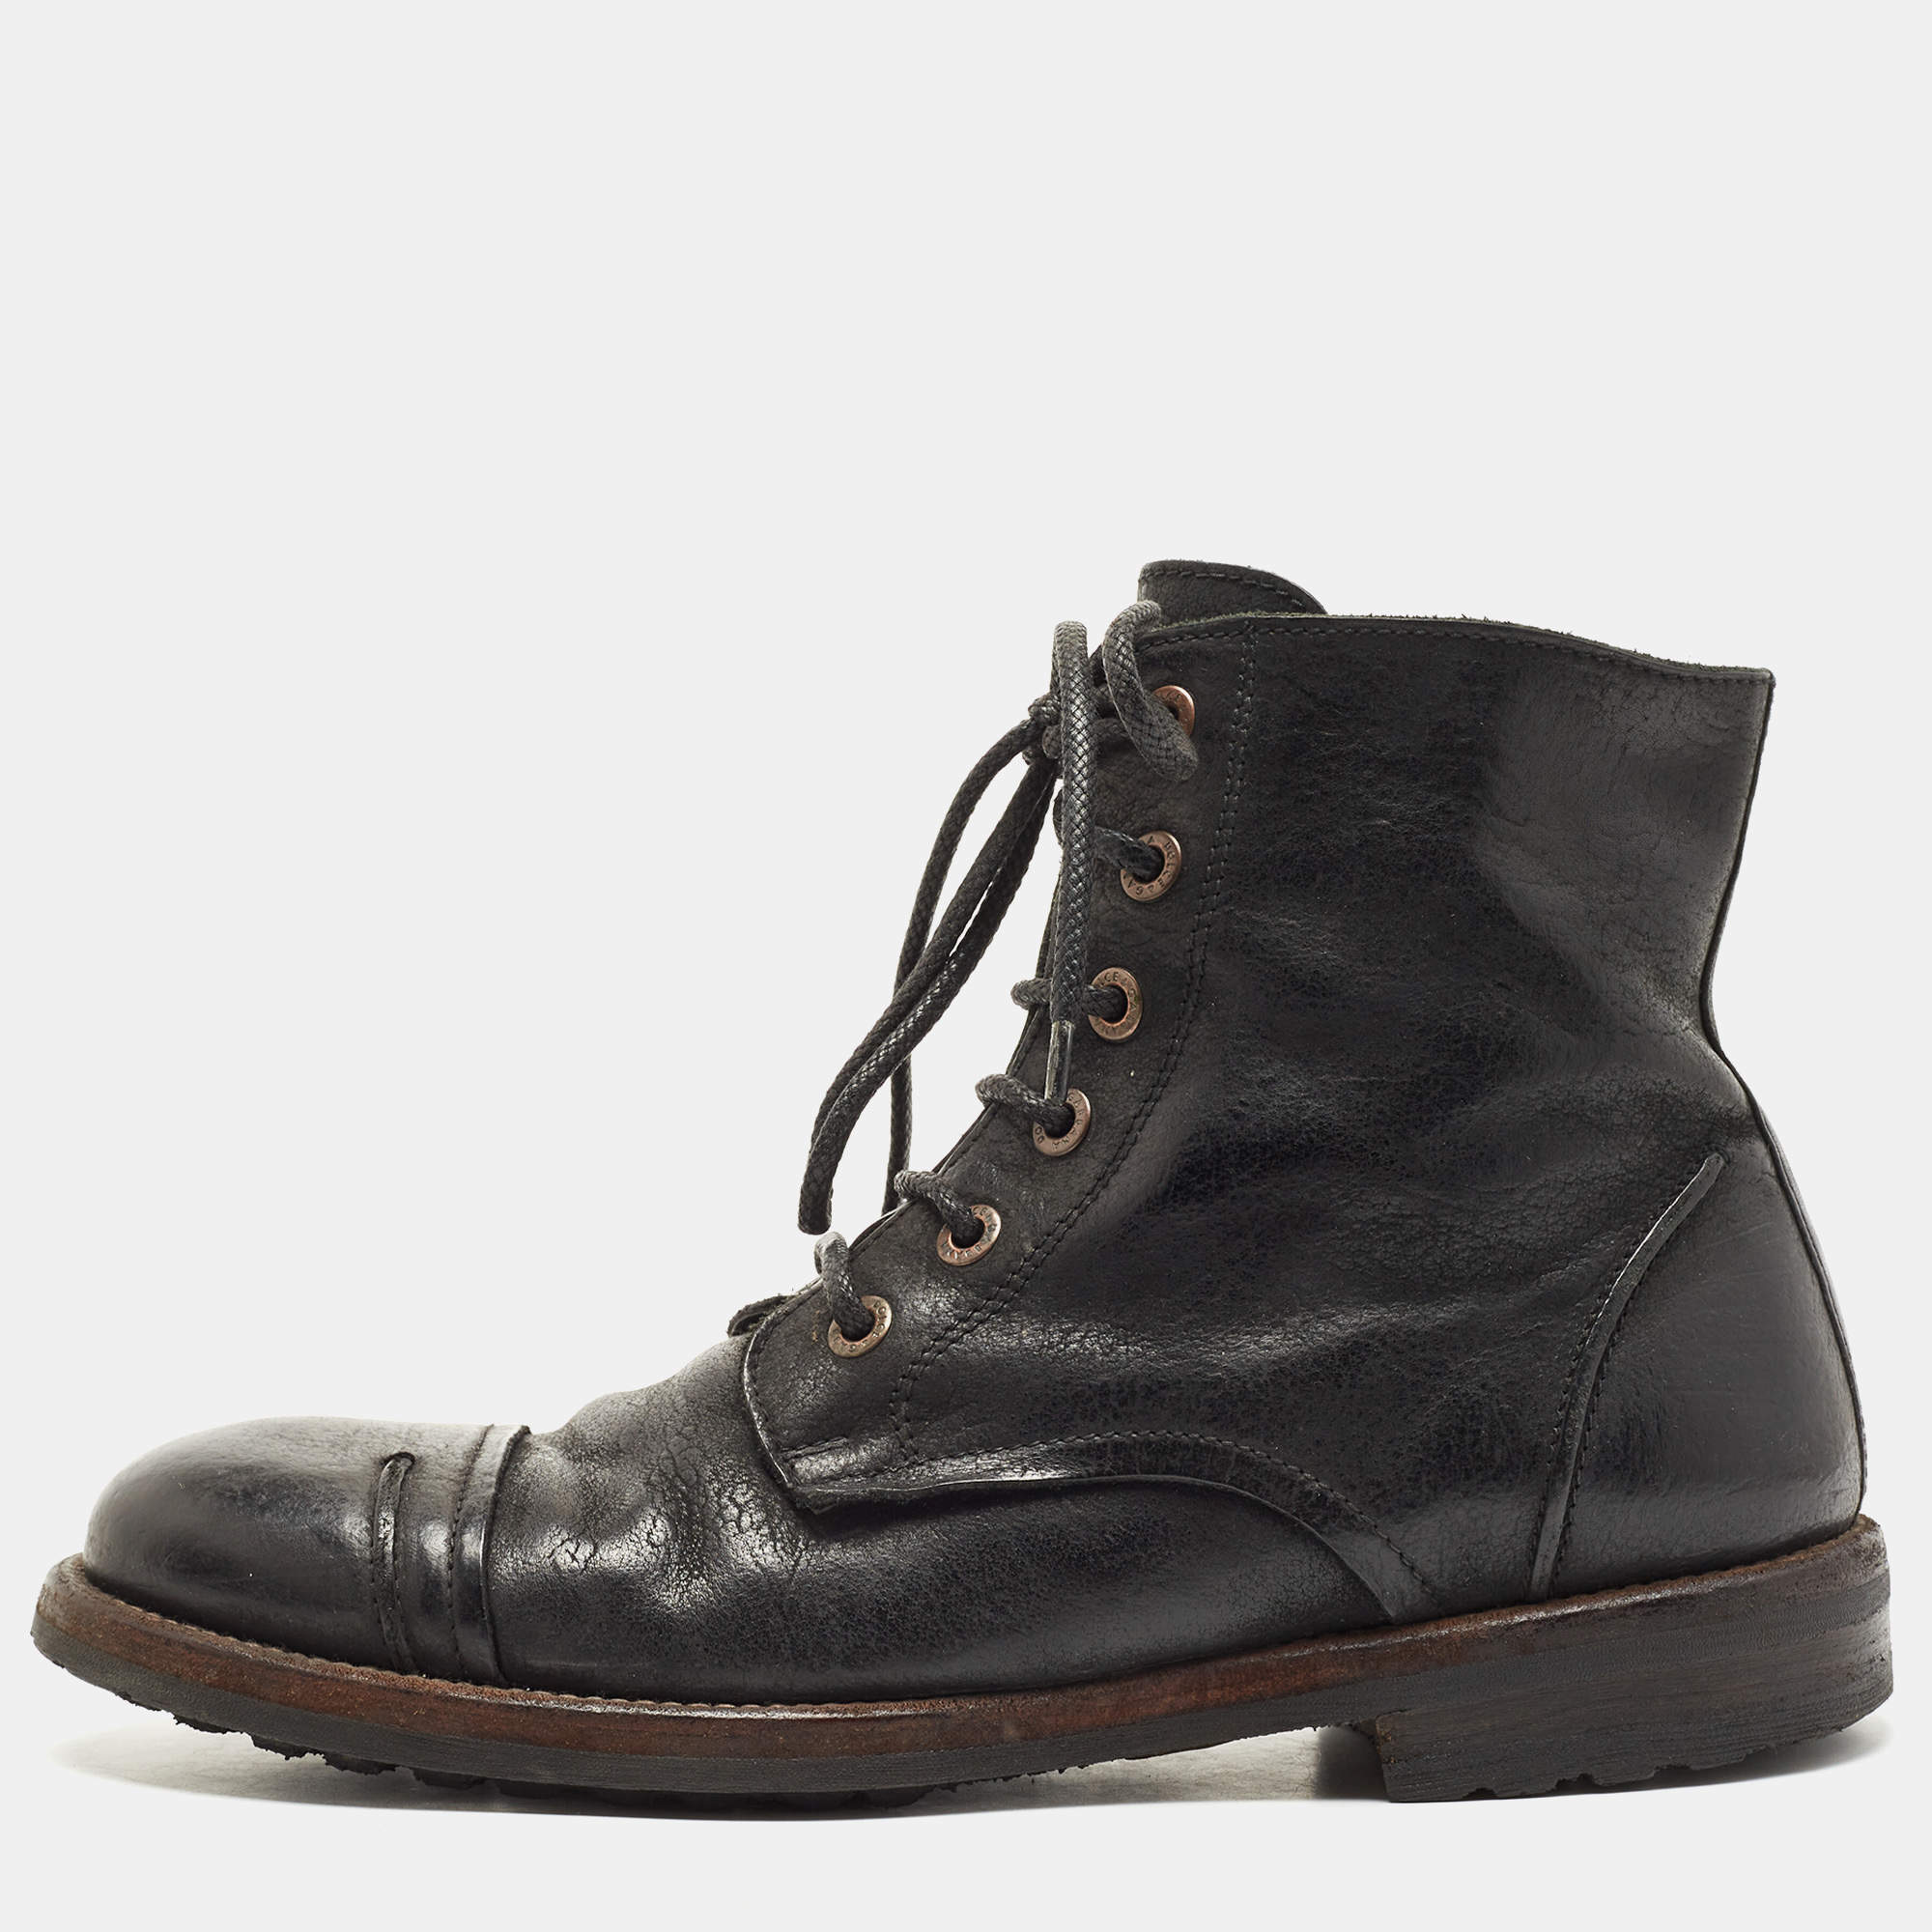 Dolce & Gabbana Black Leather Combat Boots Size 43